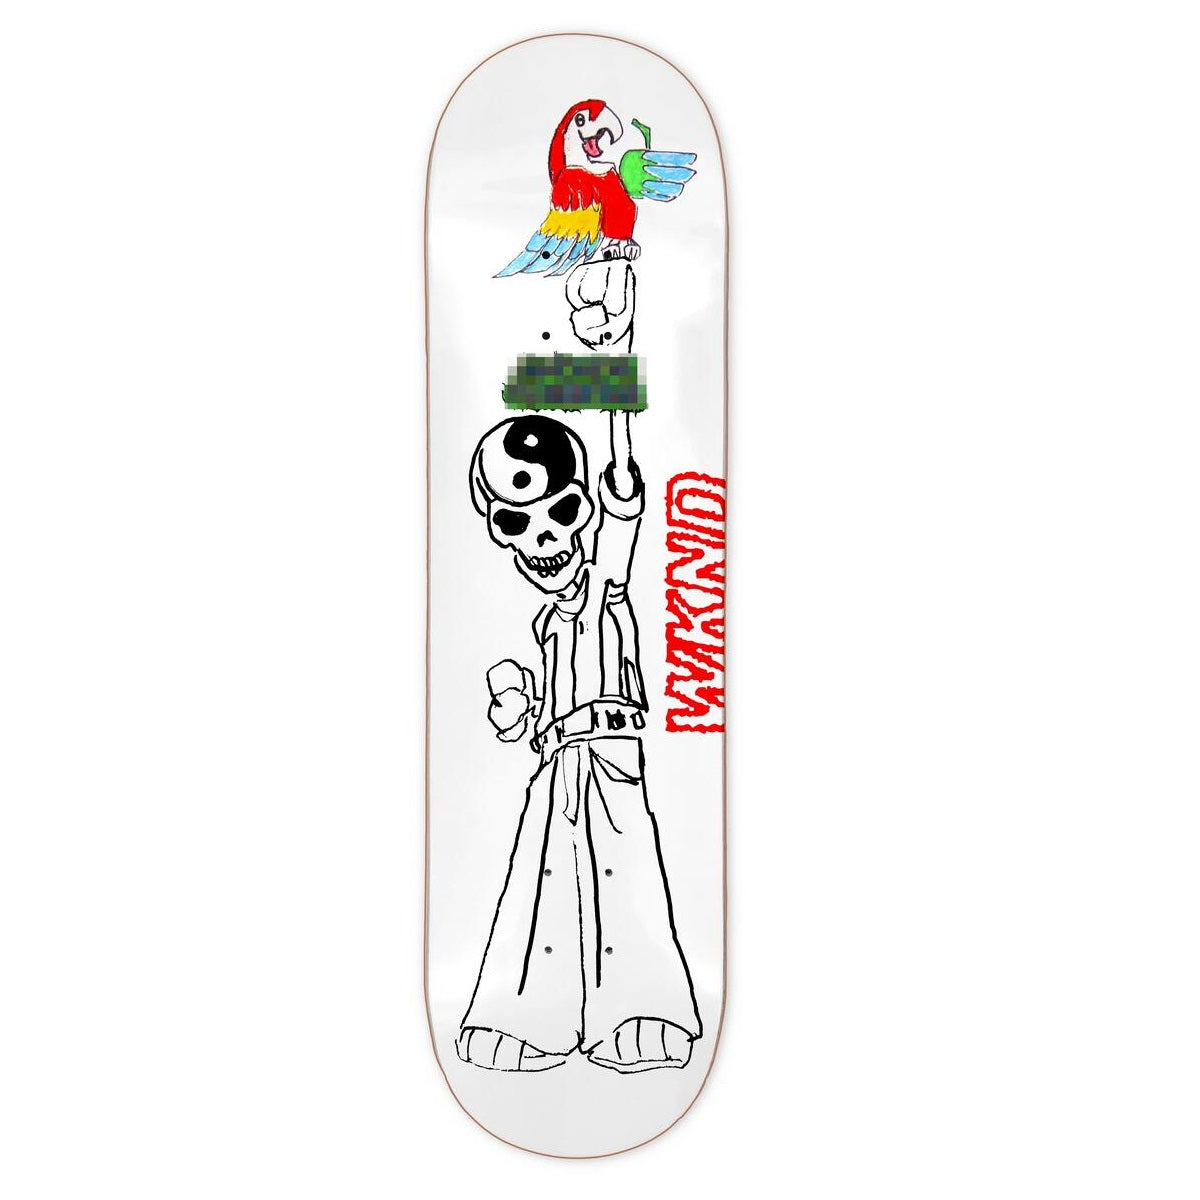 WKND Skateboards "Andrew Considine-Parrot Head" 8.375" Deck